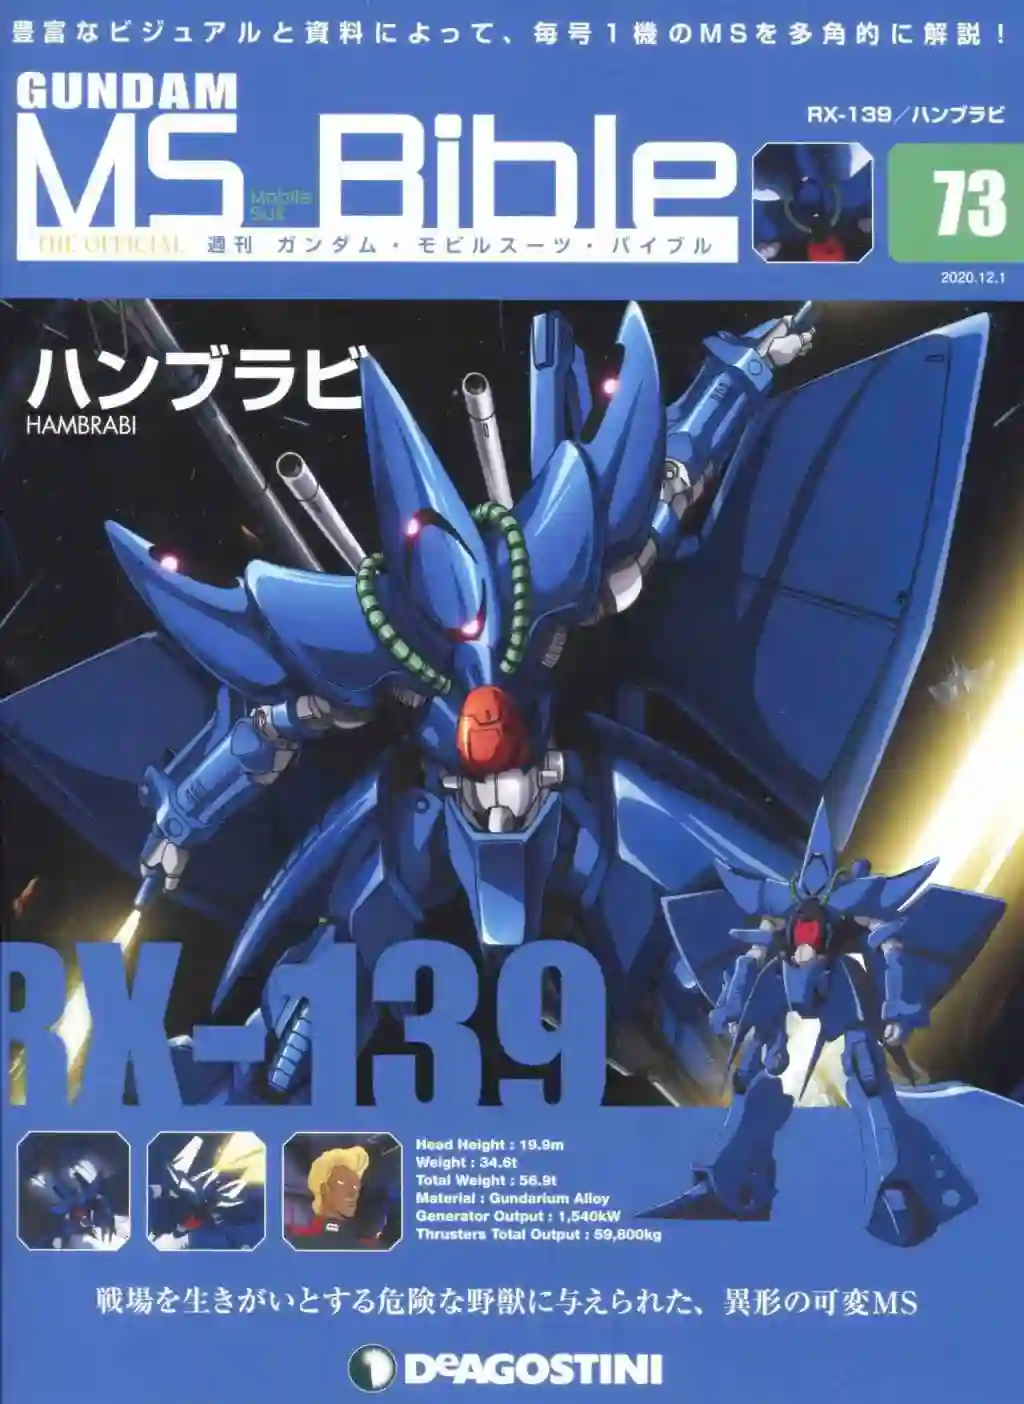 Gundam Mobile Suit Bible第73卷